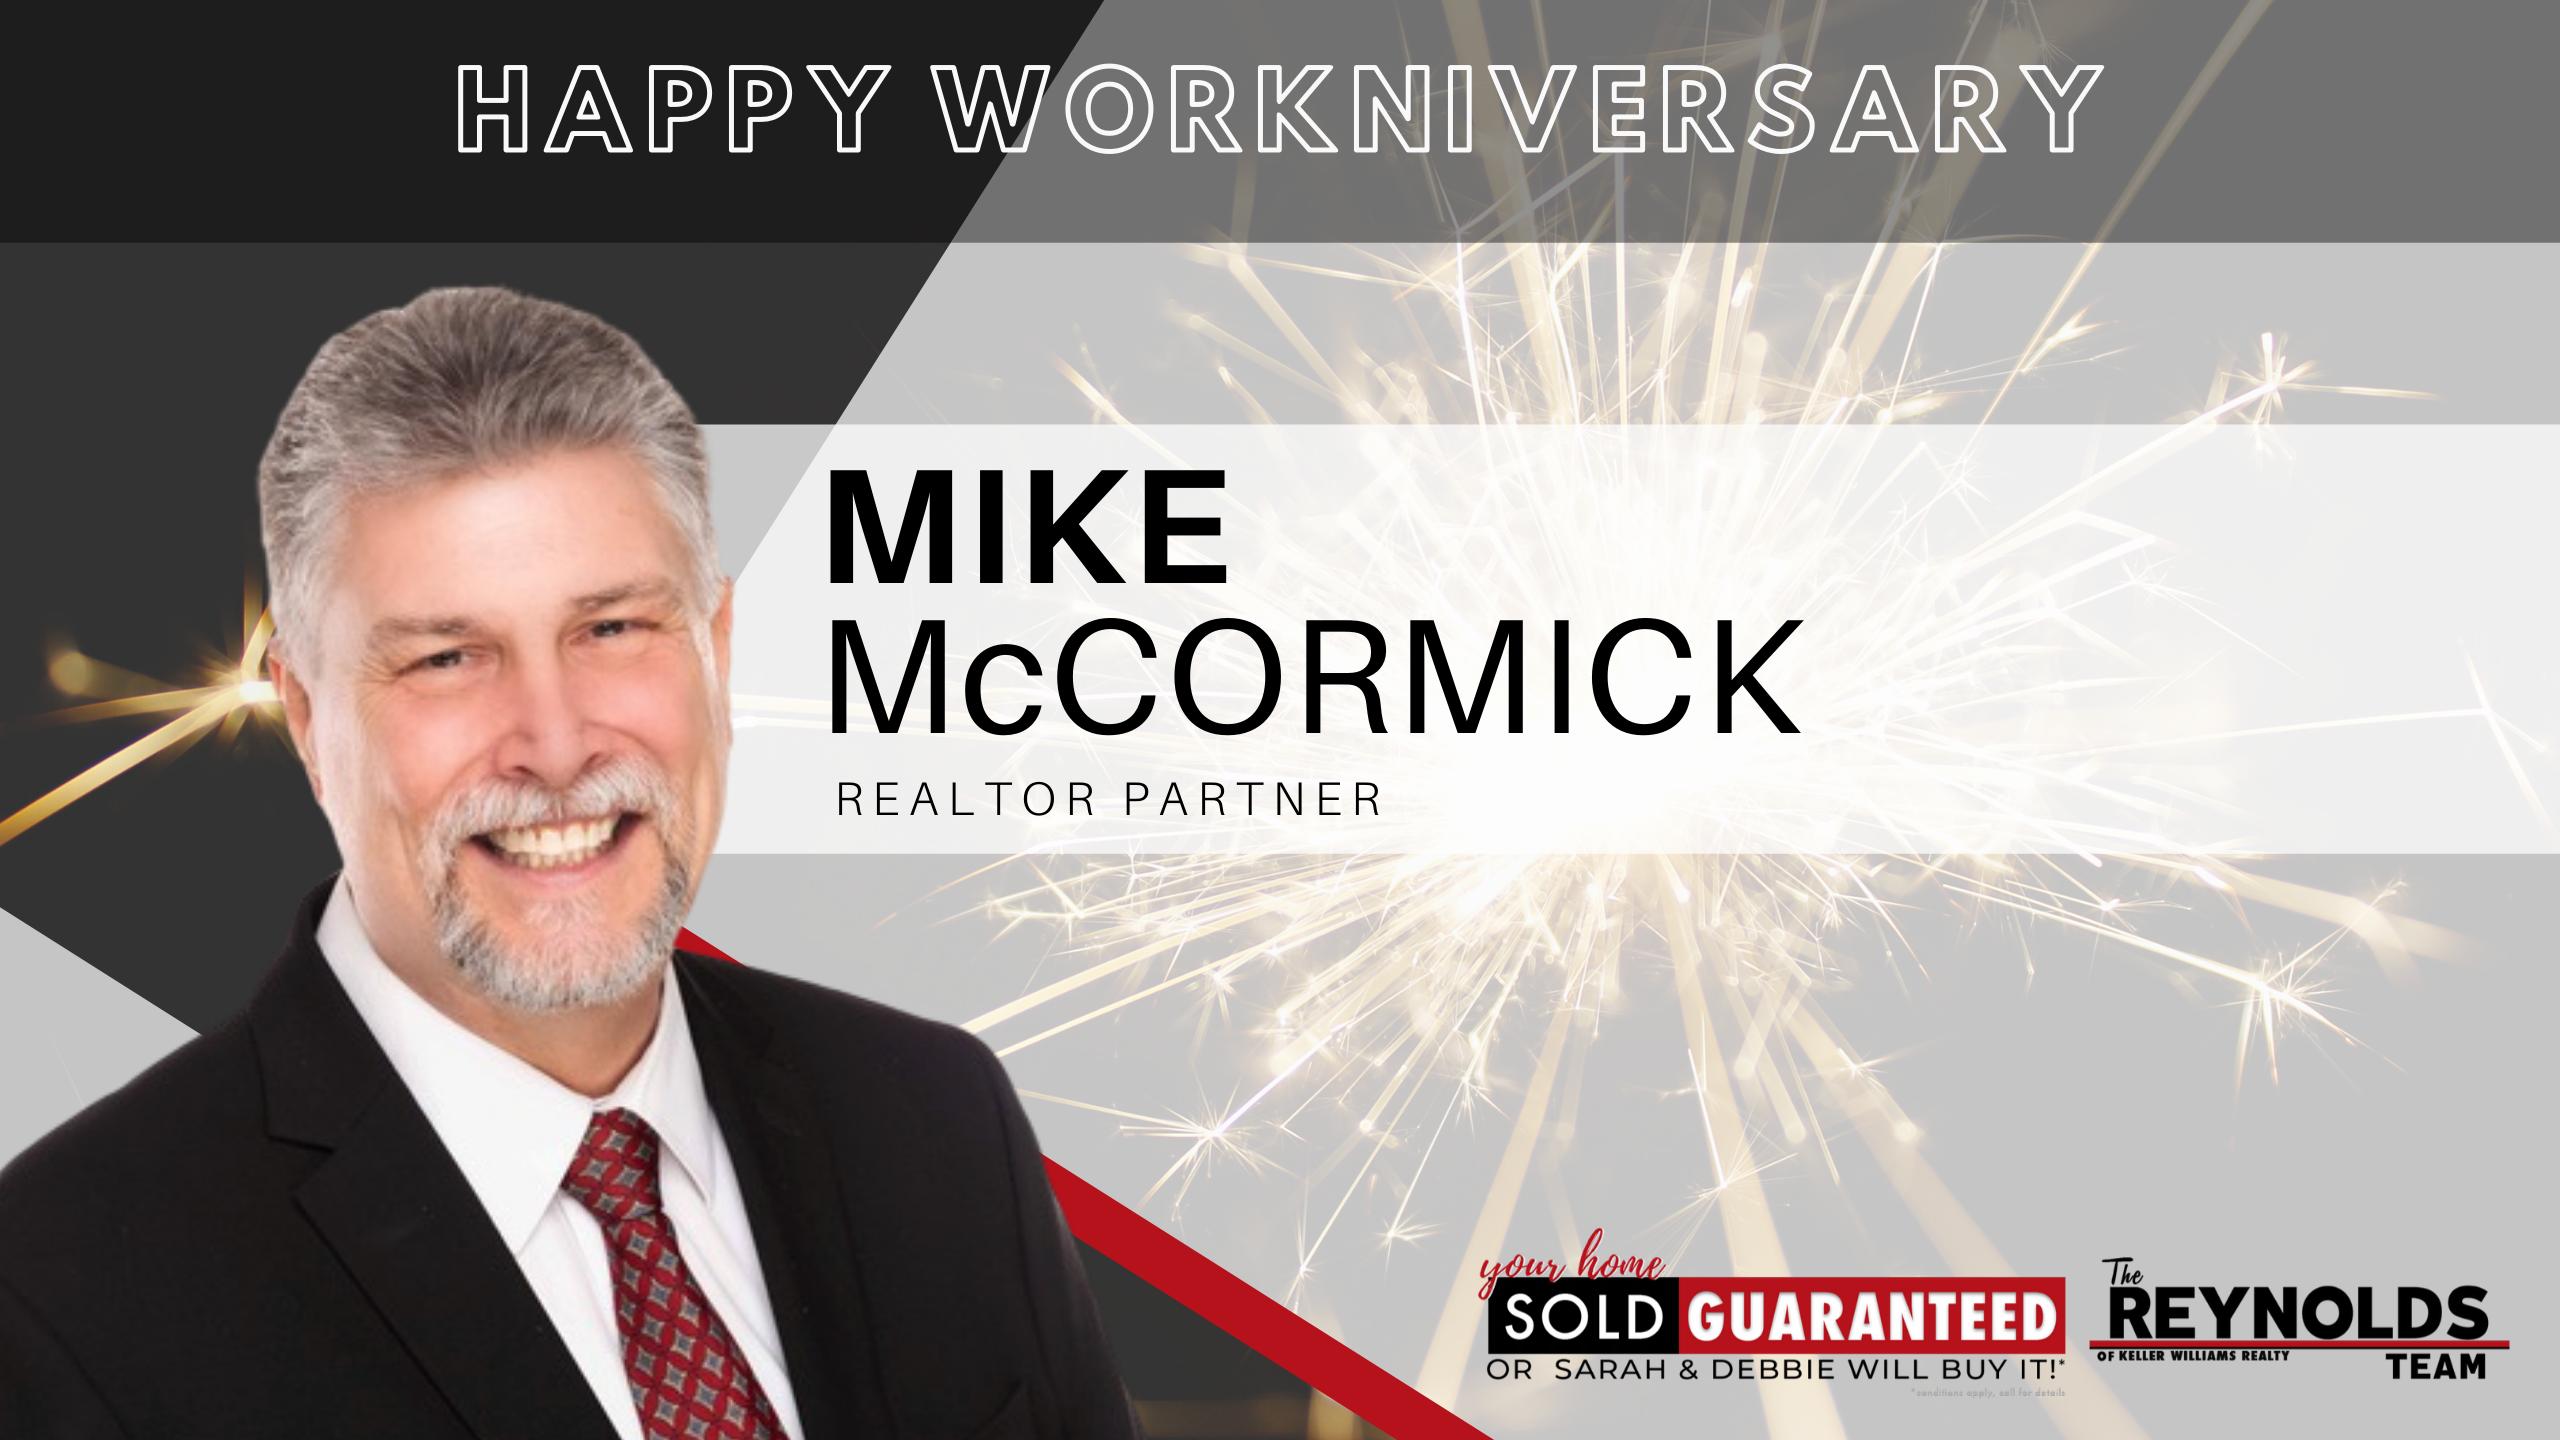 Happy Workniversary, Mike McCormick